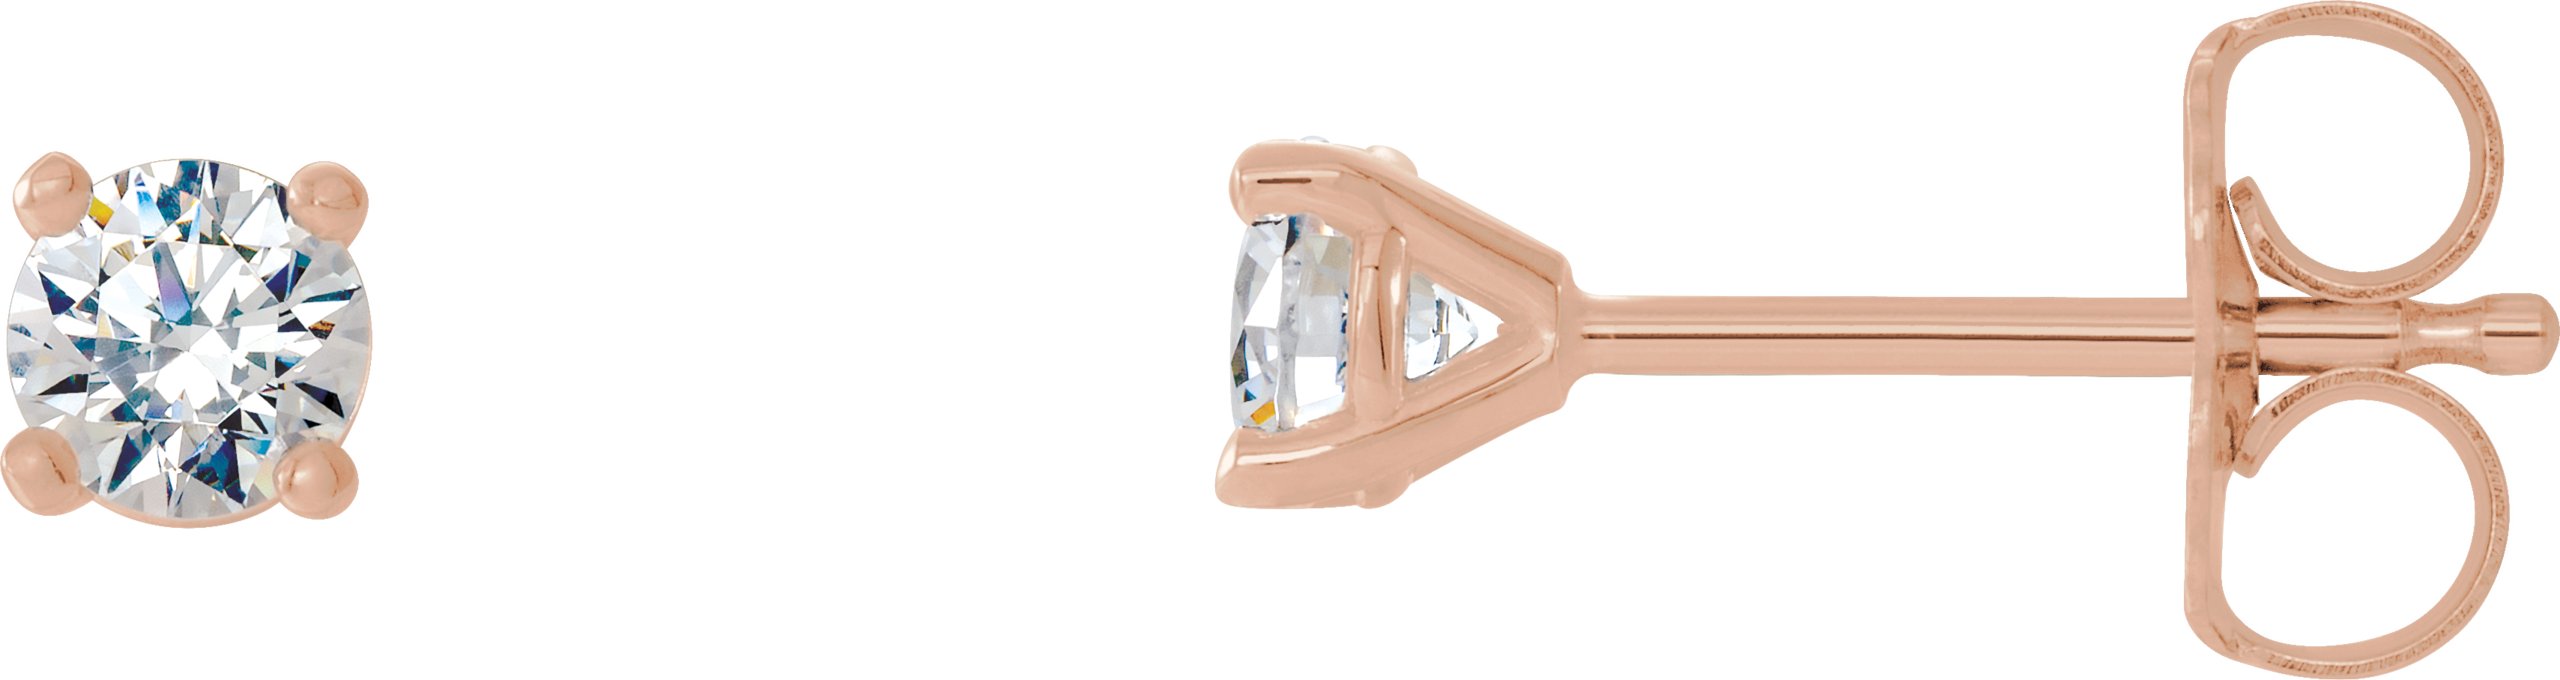 14K Rose 1/4 CTW Lab-Grown Diamond 4-Prong Stud Earrings